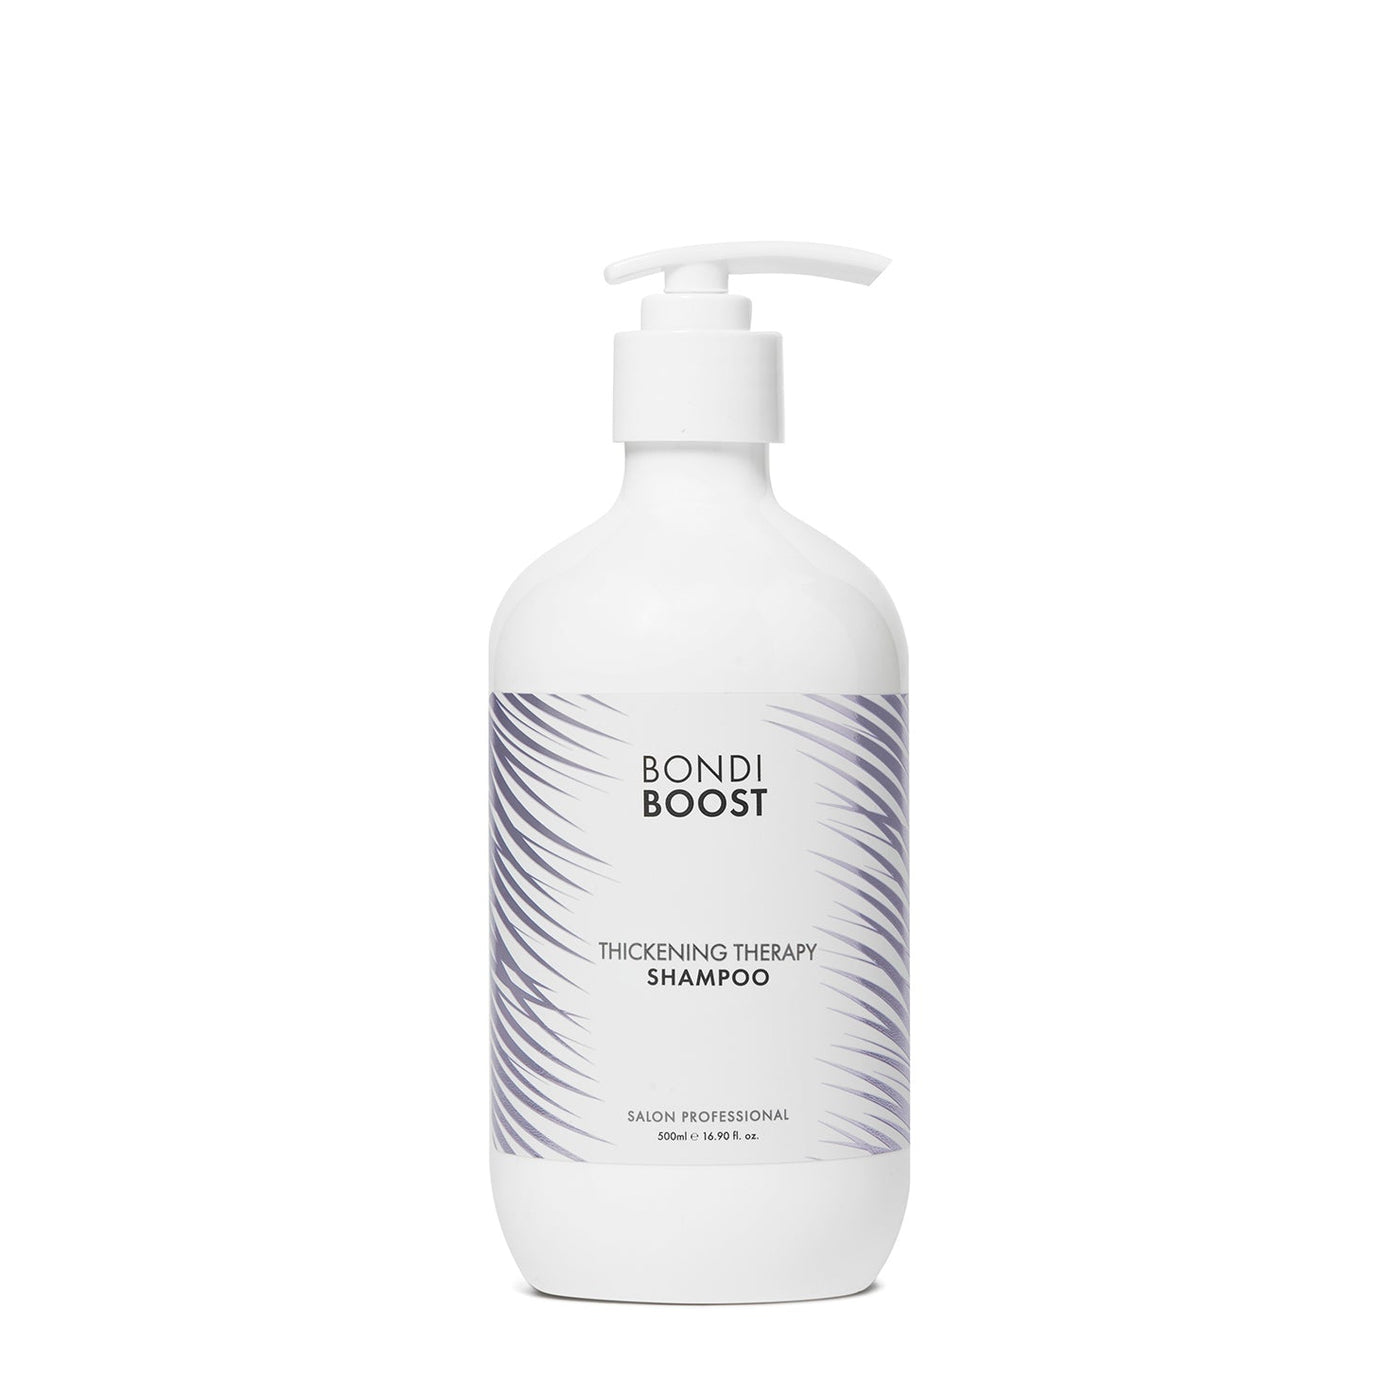 BondiBoost Thickening Therapy Shampoo 1000ml - NEW